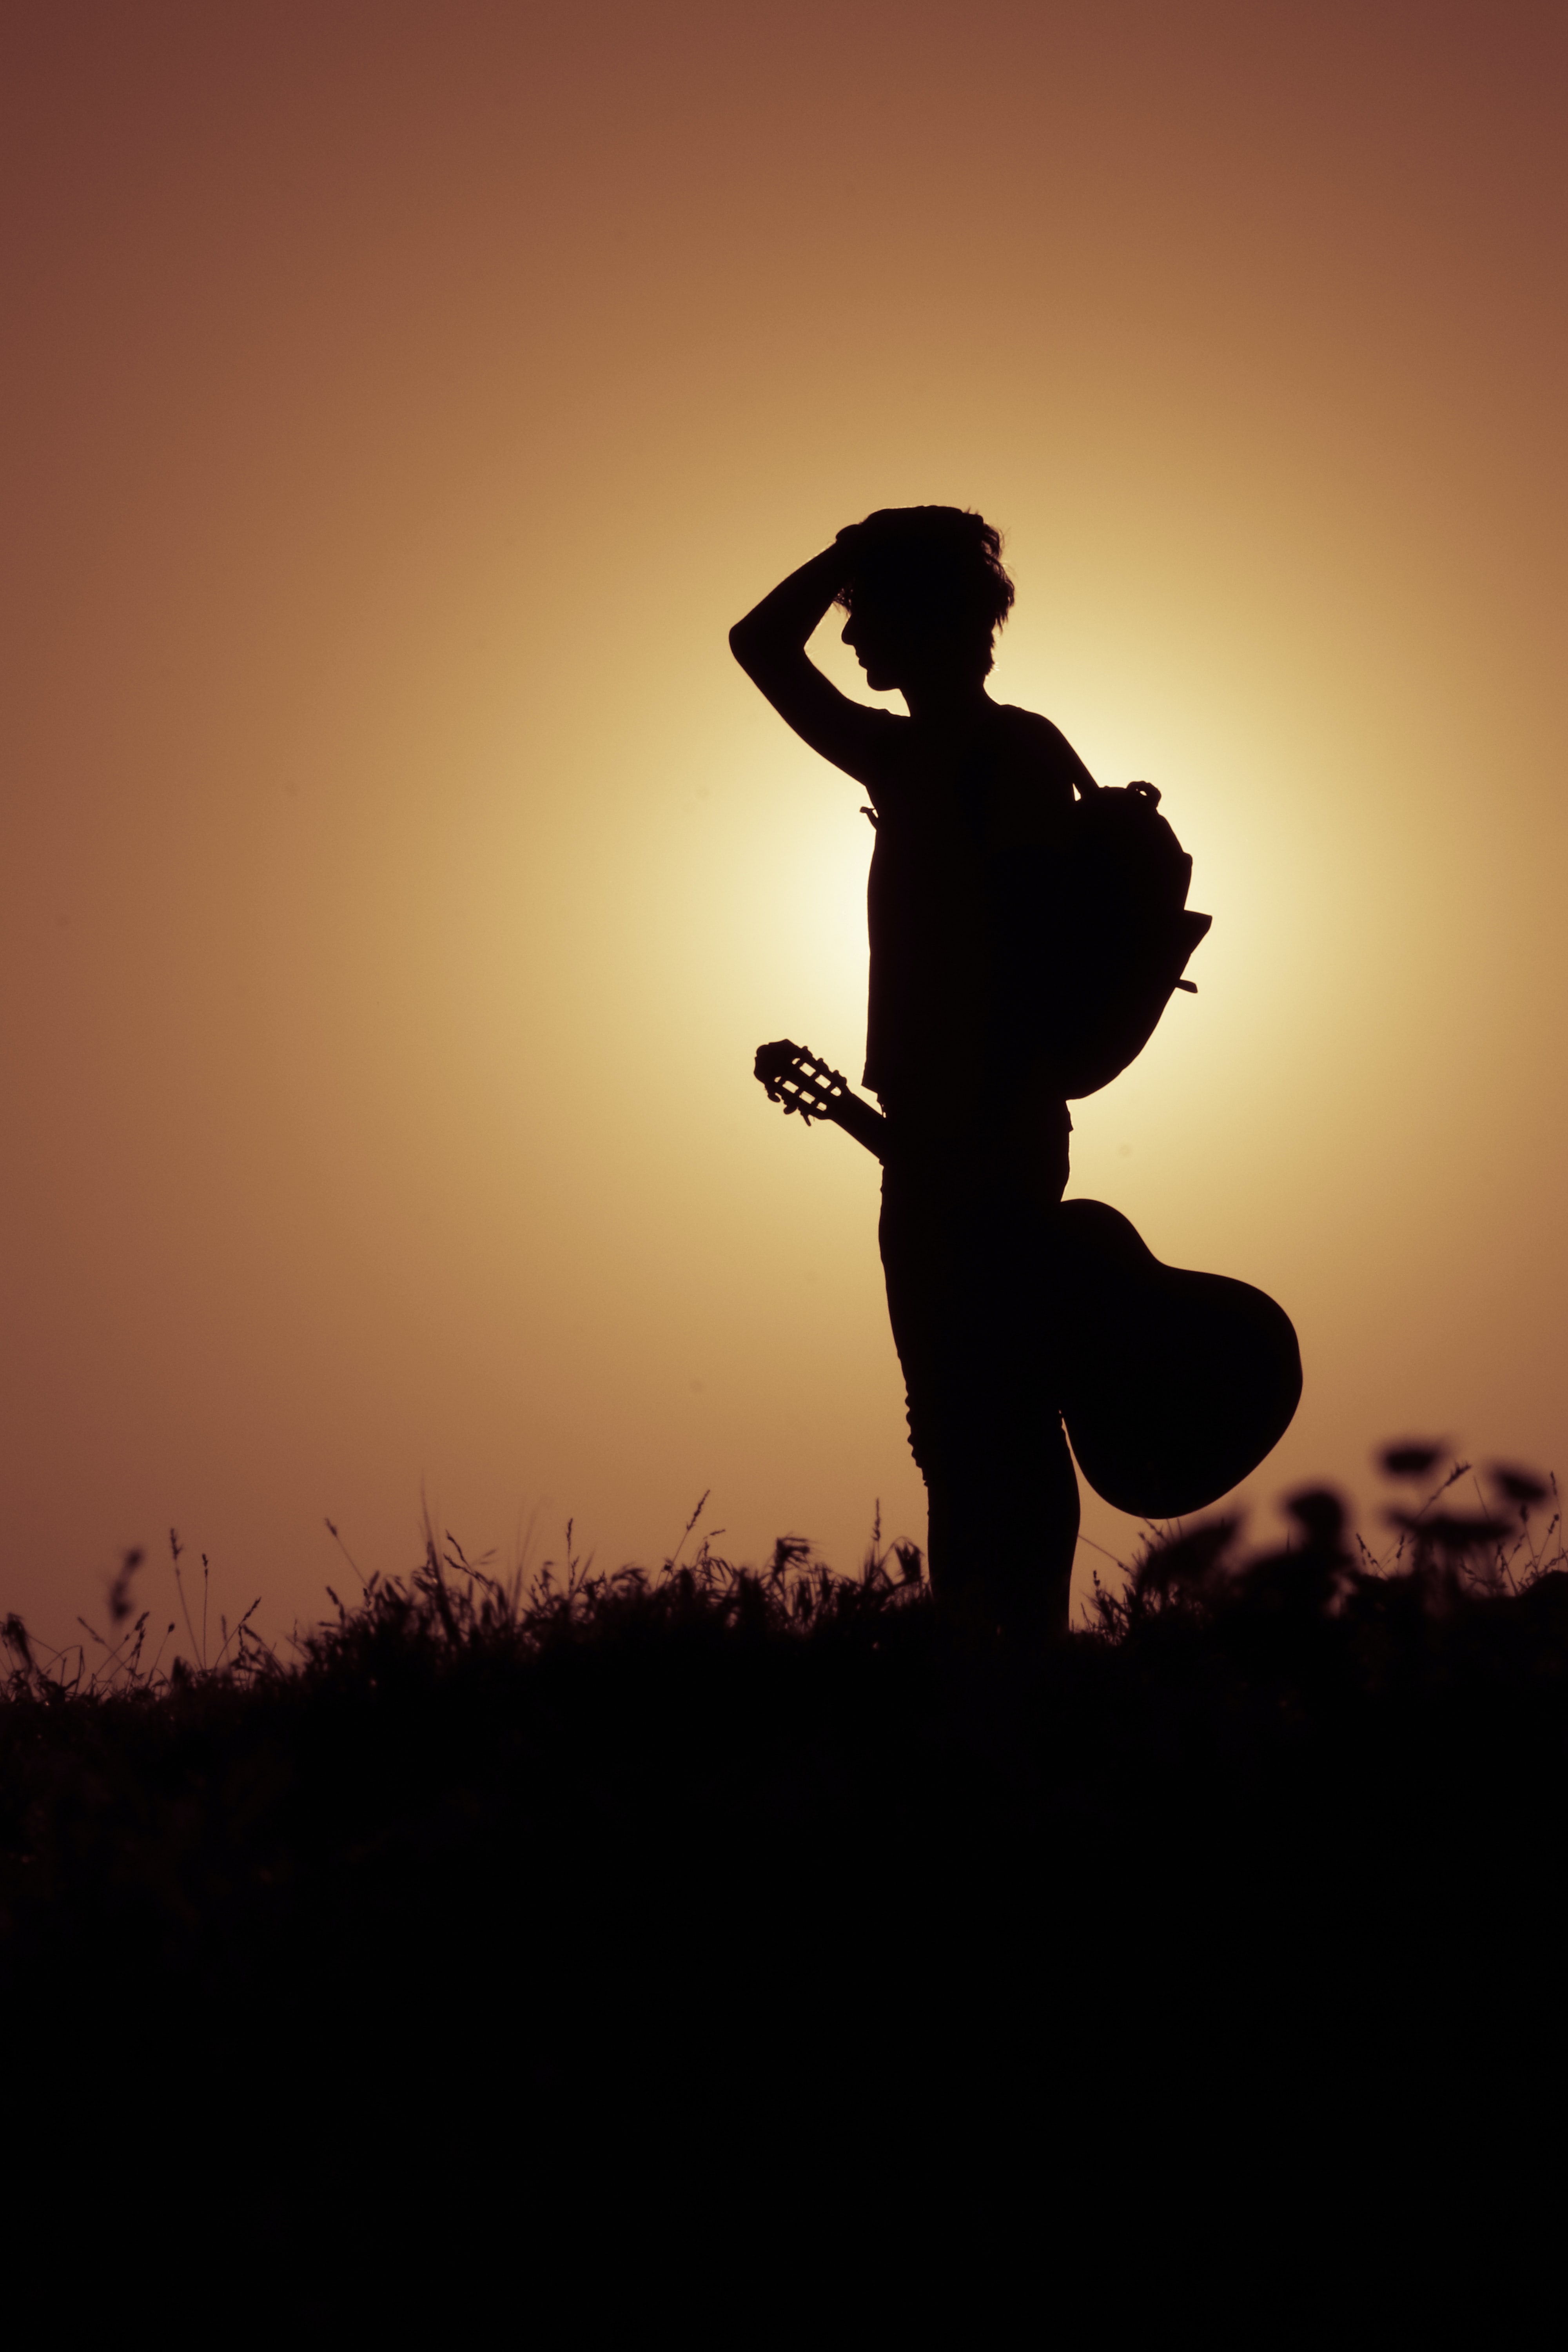 guitar, musician, musical instrument, sunset, silhouette, miscellanea, miscellaneous Free Stock Photo